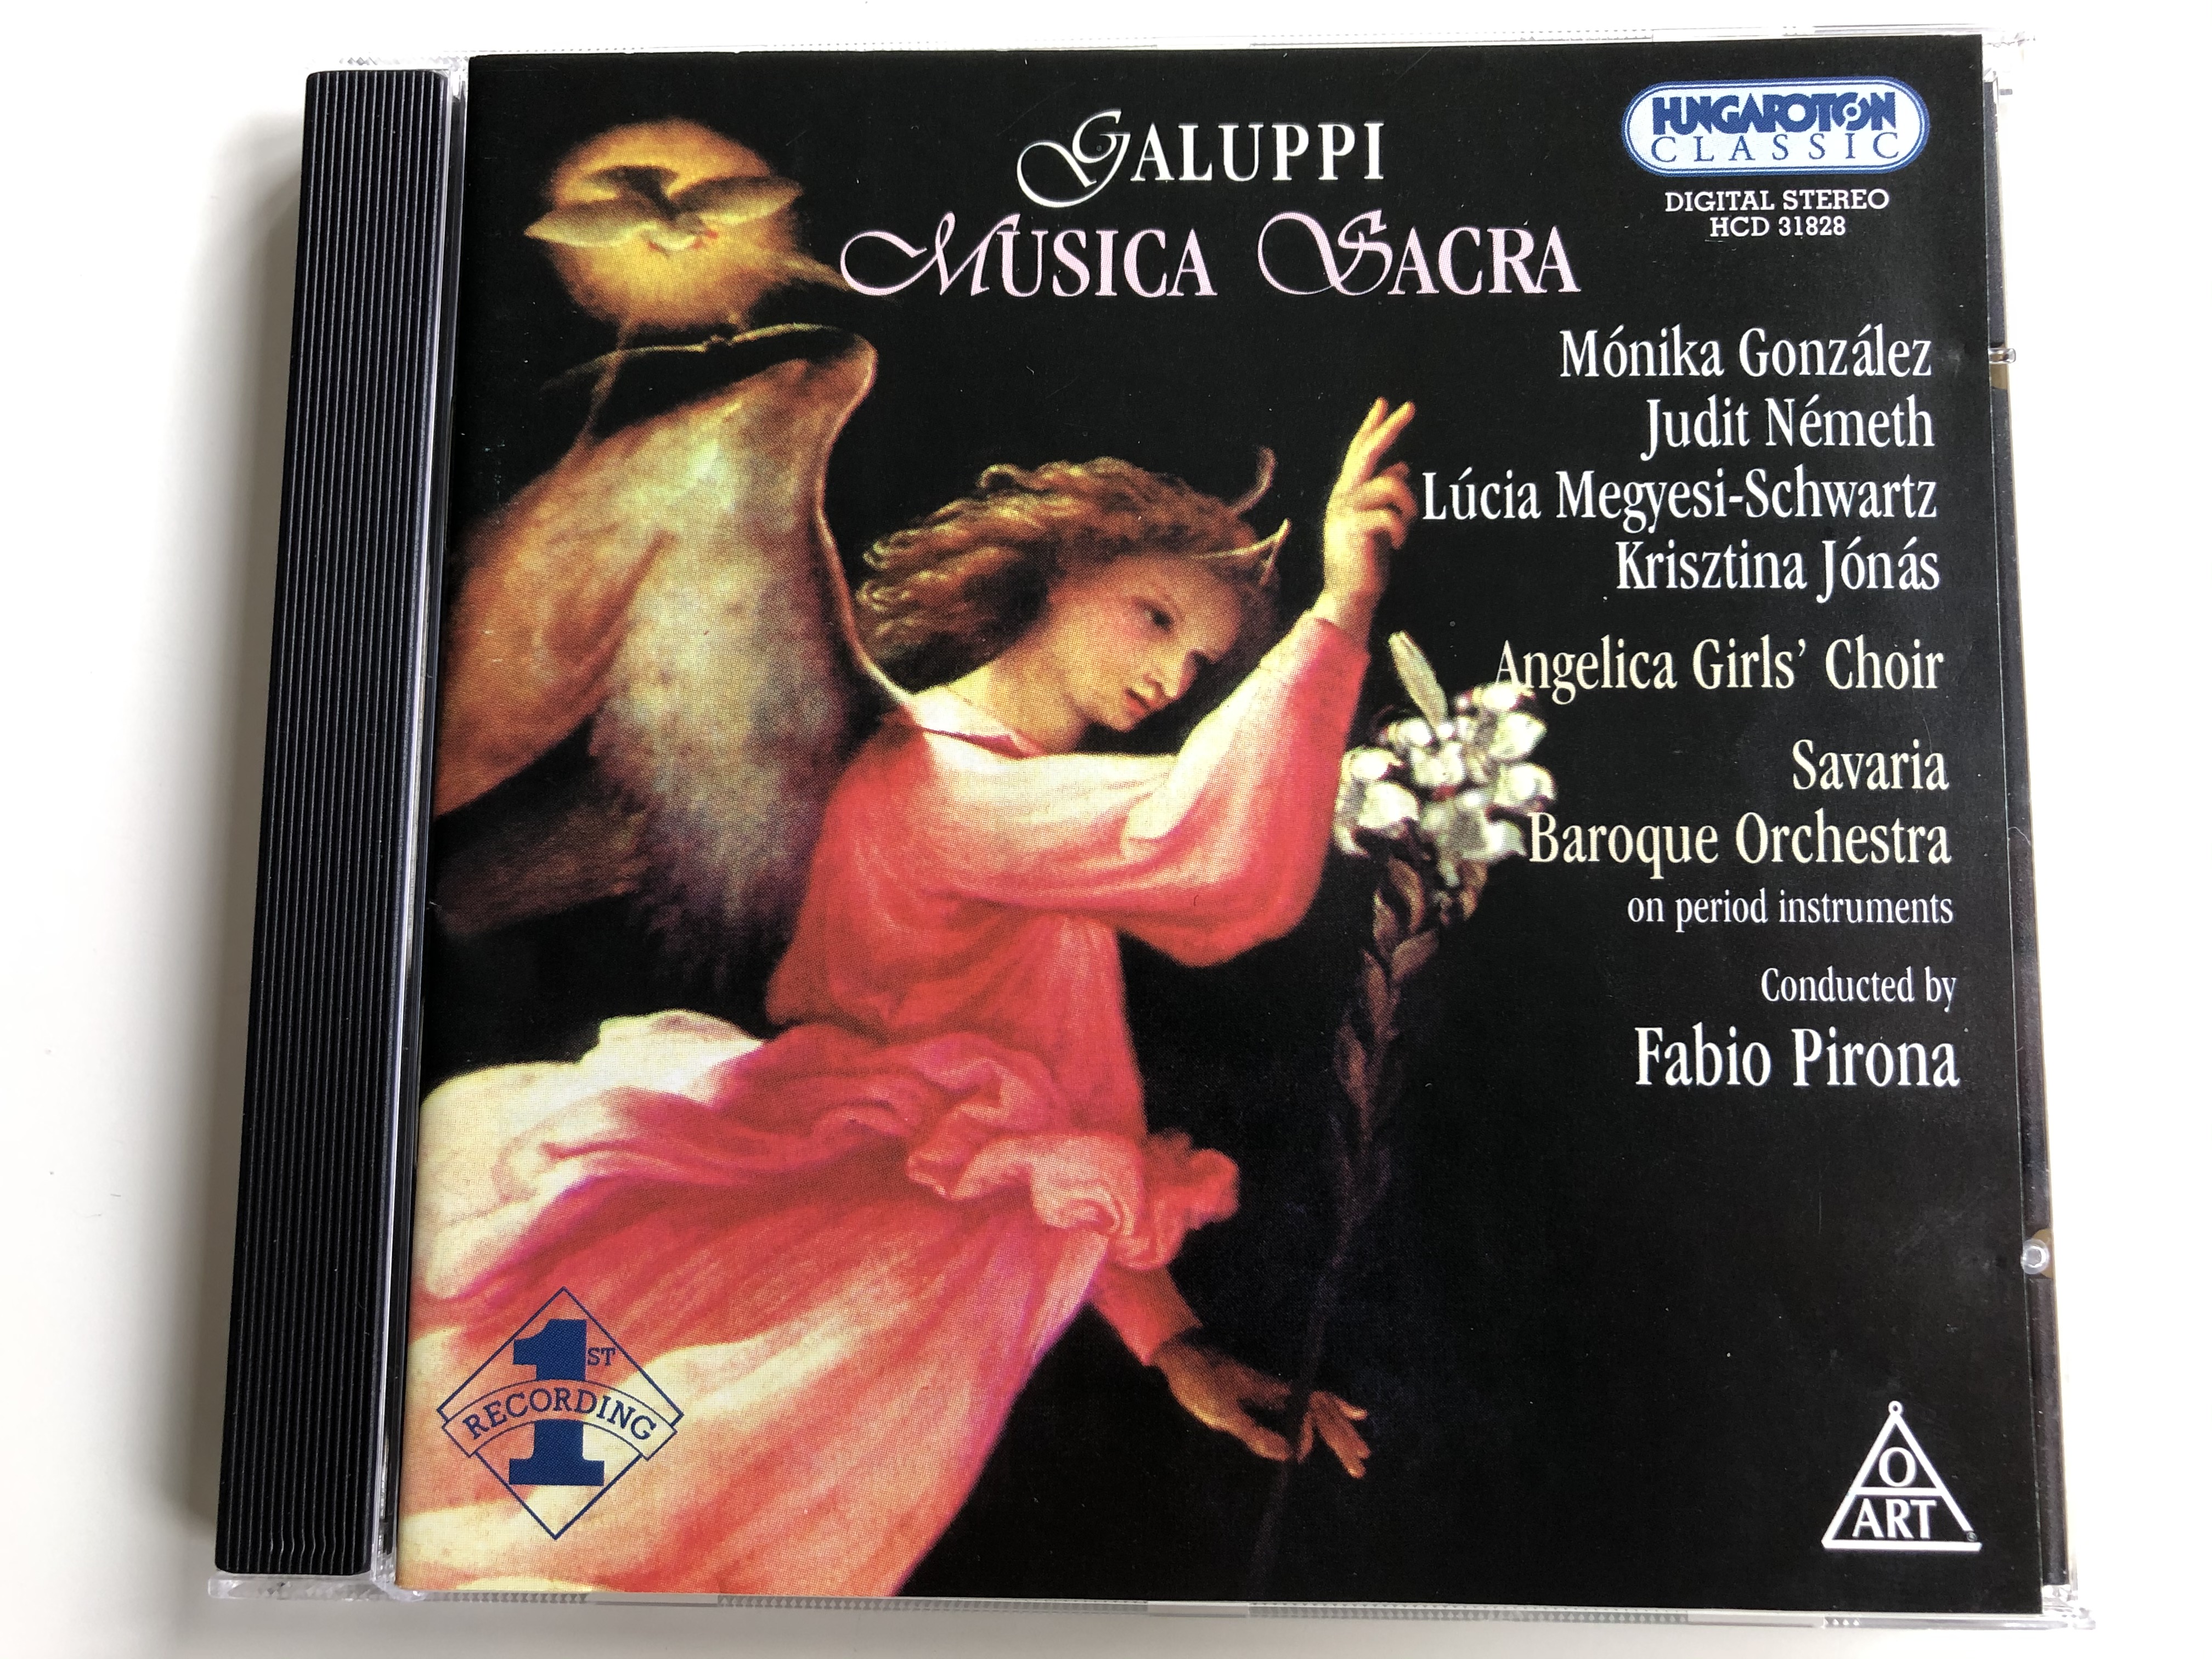 galuppi-musica-sacra-monika-gonzalez-judit-nemeth-lucia-megyesi-schwartz-krisztina-jonas-angelica-girl-s-choir-savaria-baroque-orchestra-on-period-instruments-hungaroton-classic-audio-cd-2-1-.jpg